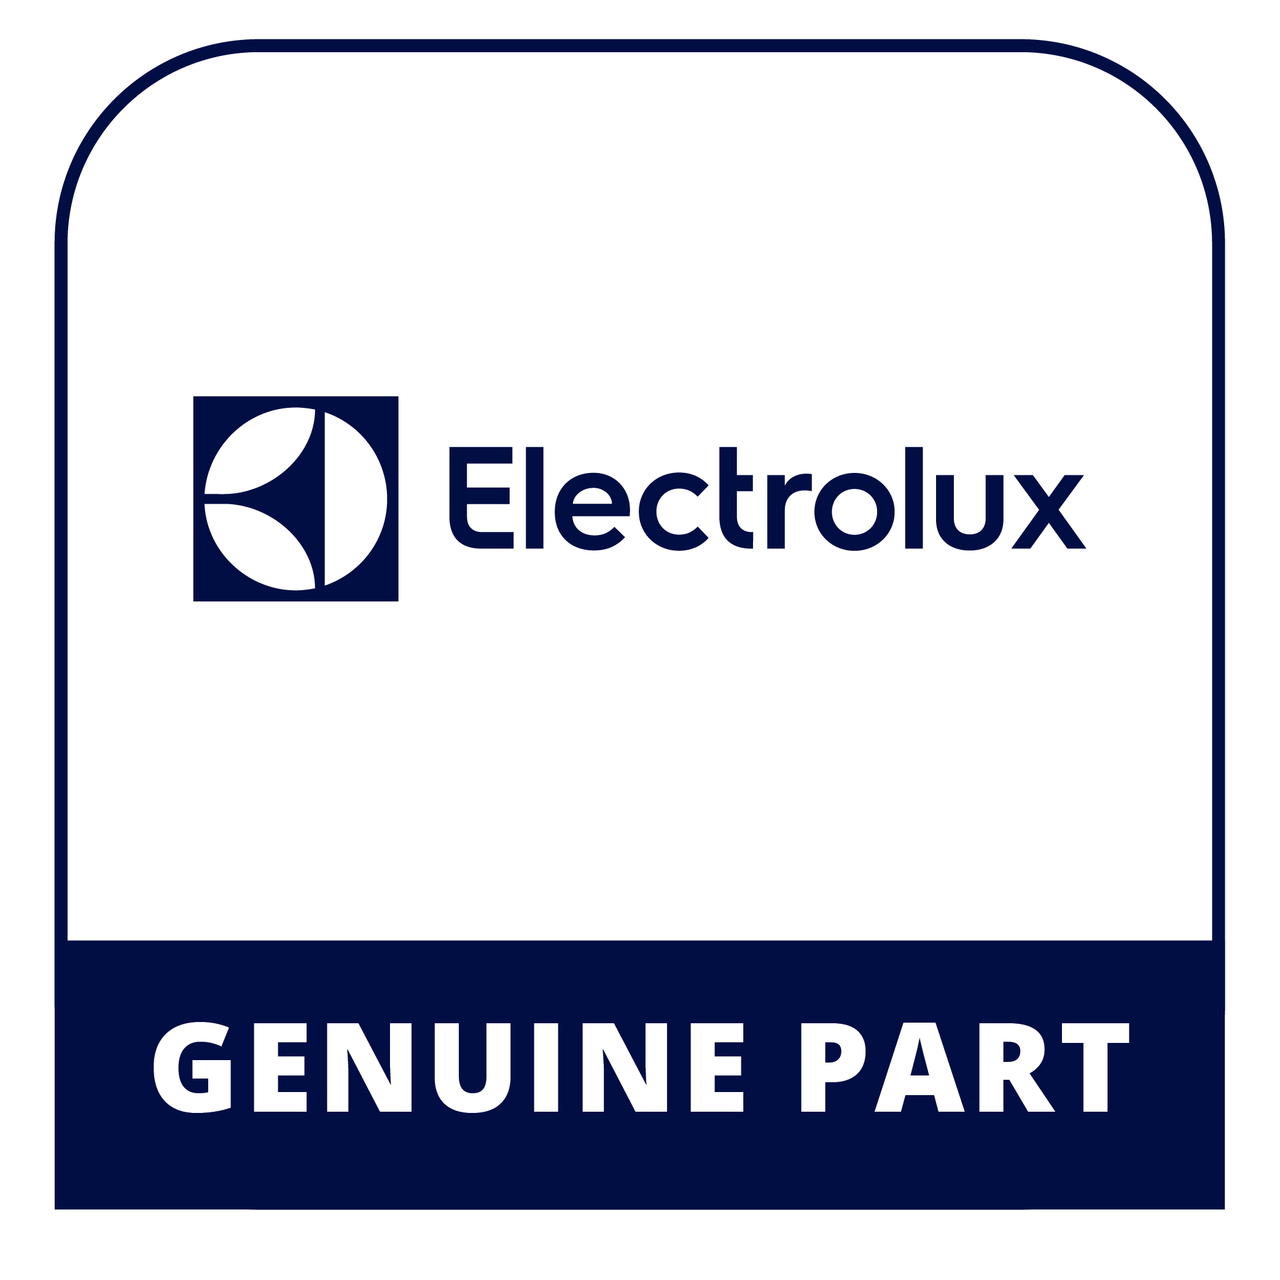 Frigidaire - Electrolux 318531701 Spacer - Genuine Electrolux Part